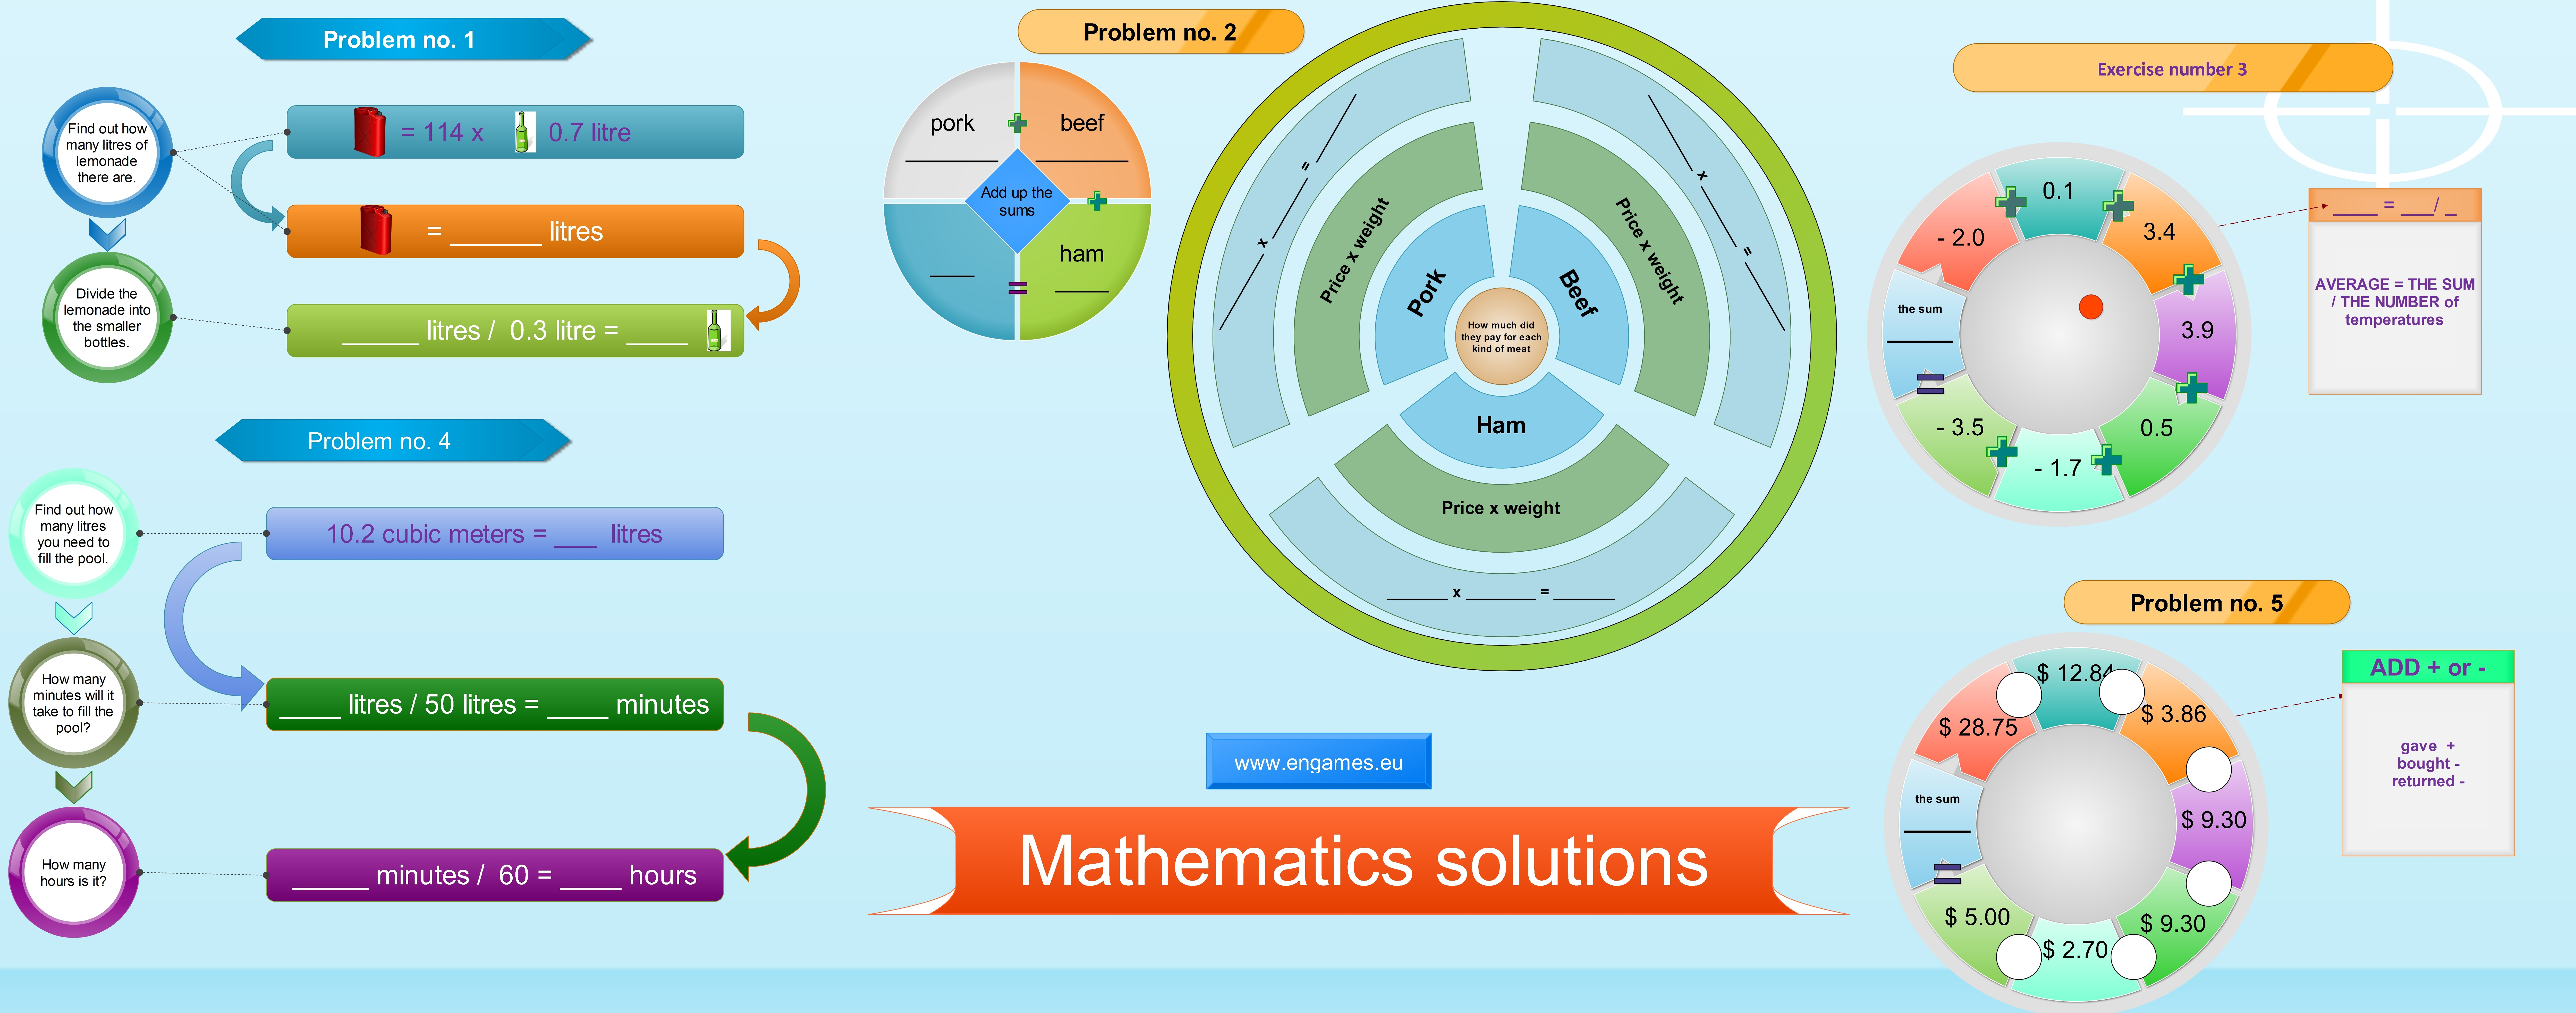 Mathematics solutions Mind map